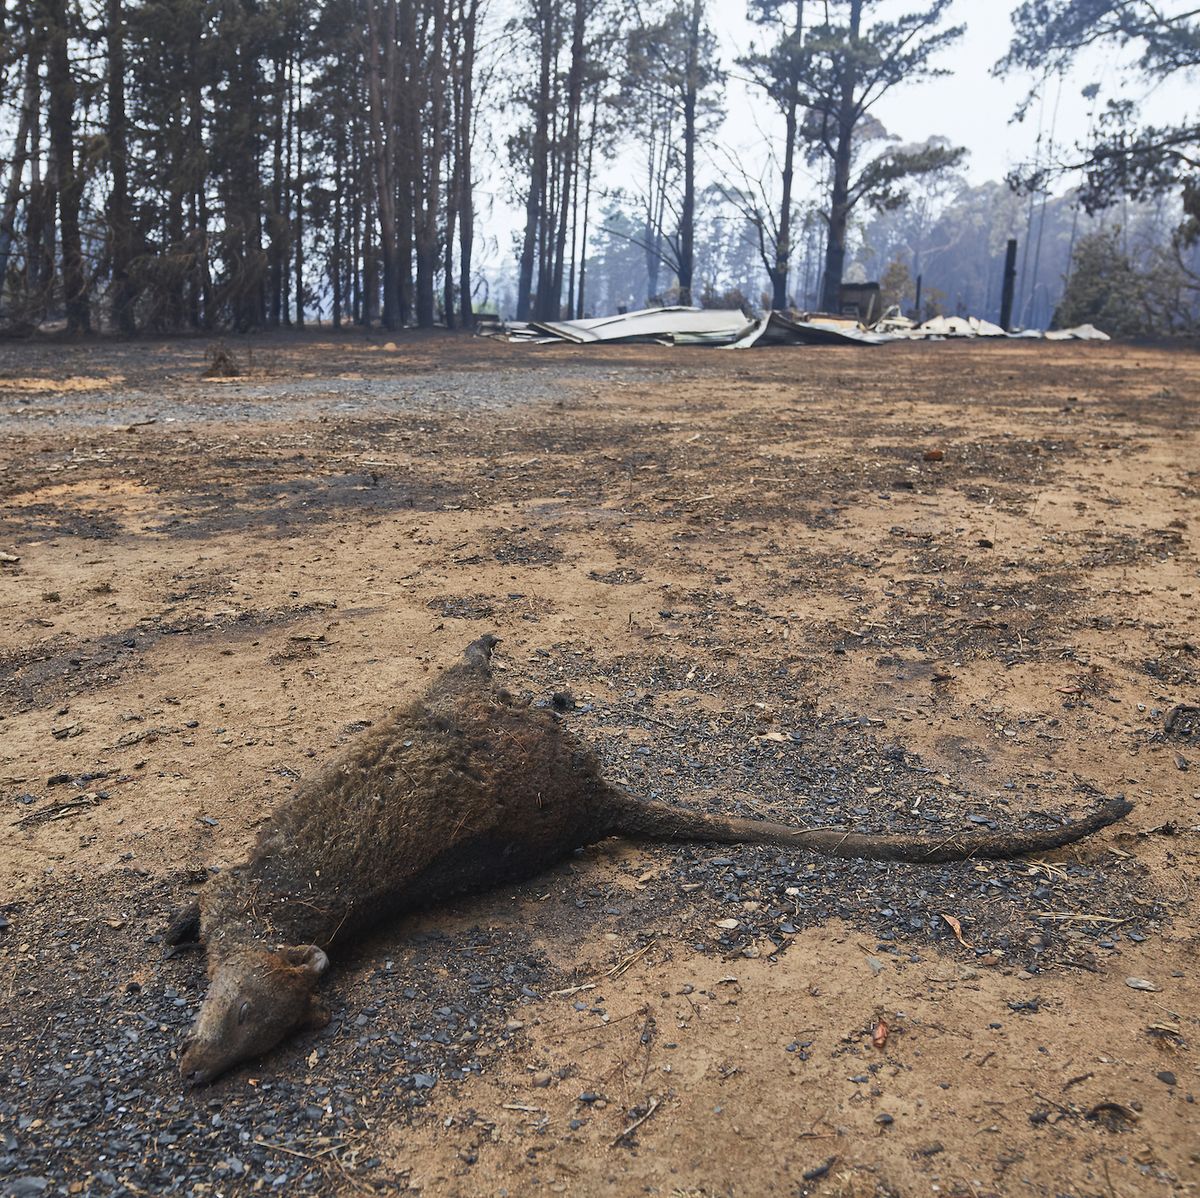 Australia Wildfires: 480 Million Animals Dead as Video Shows Damage